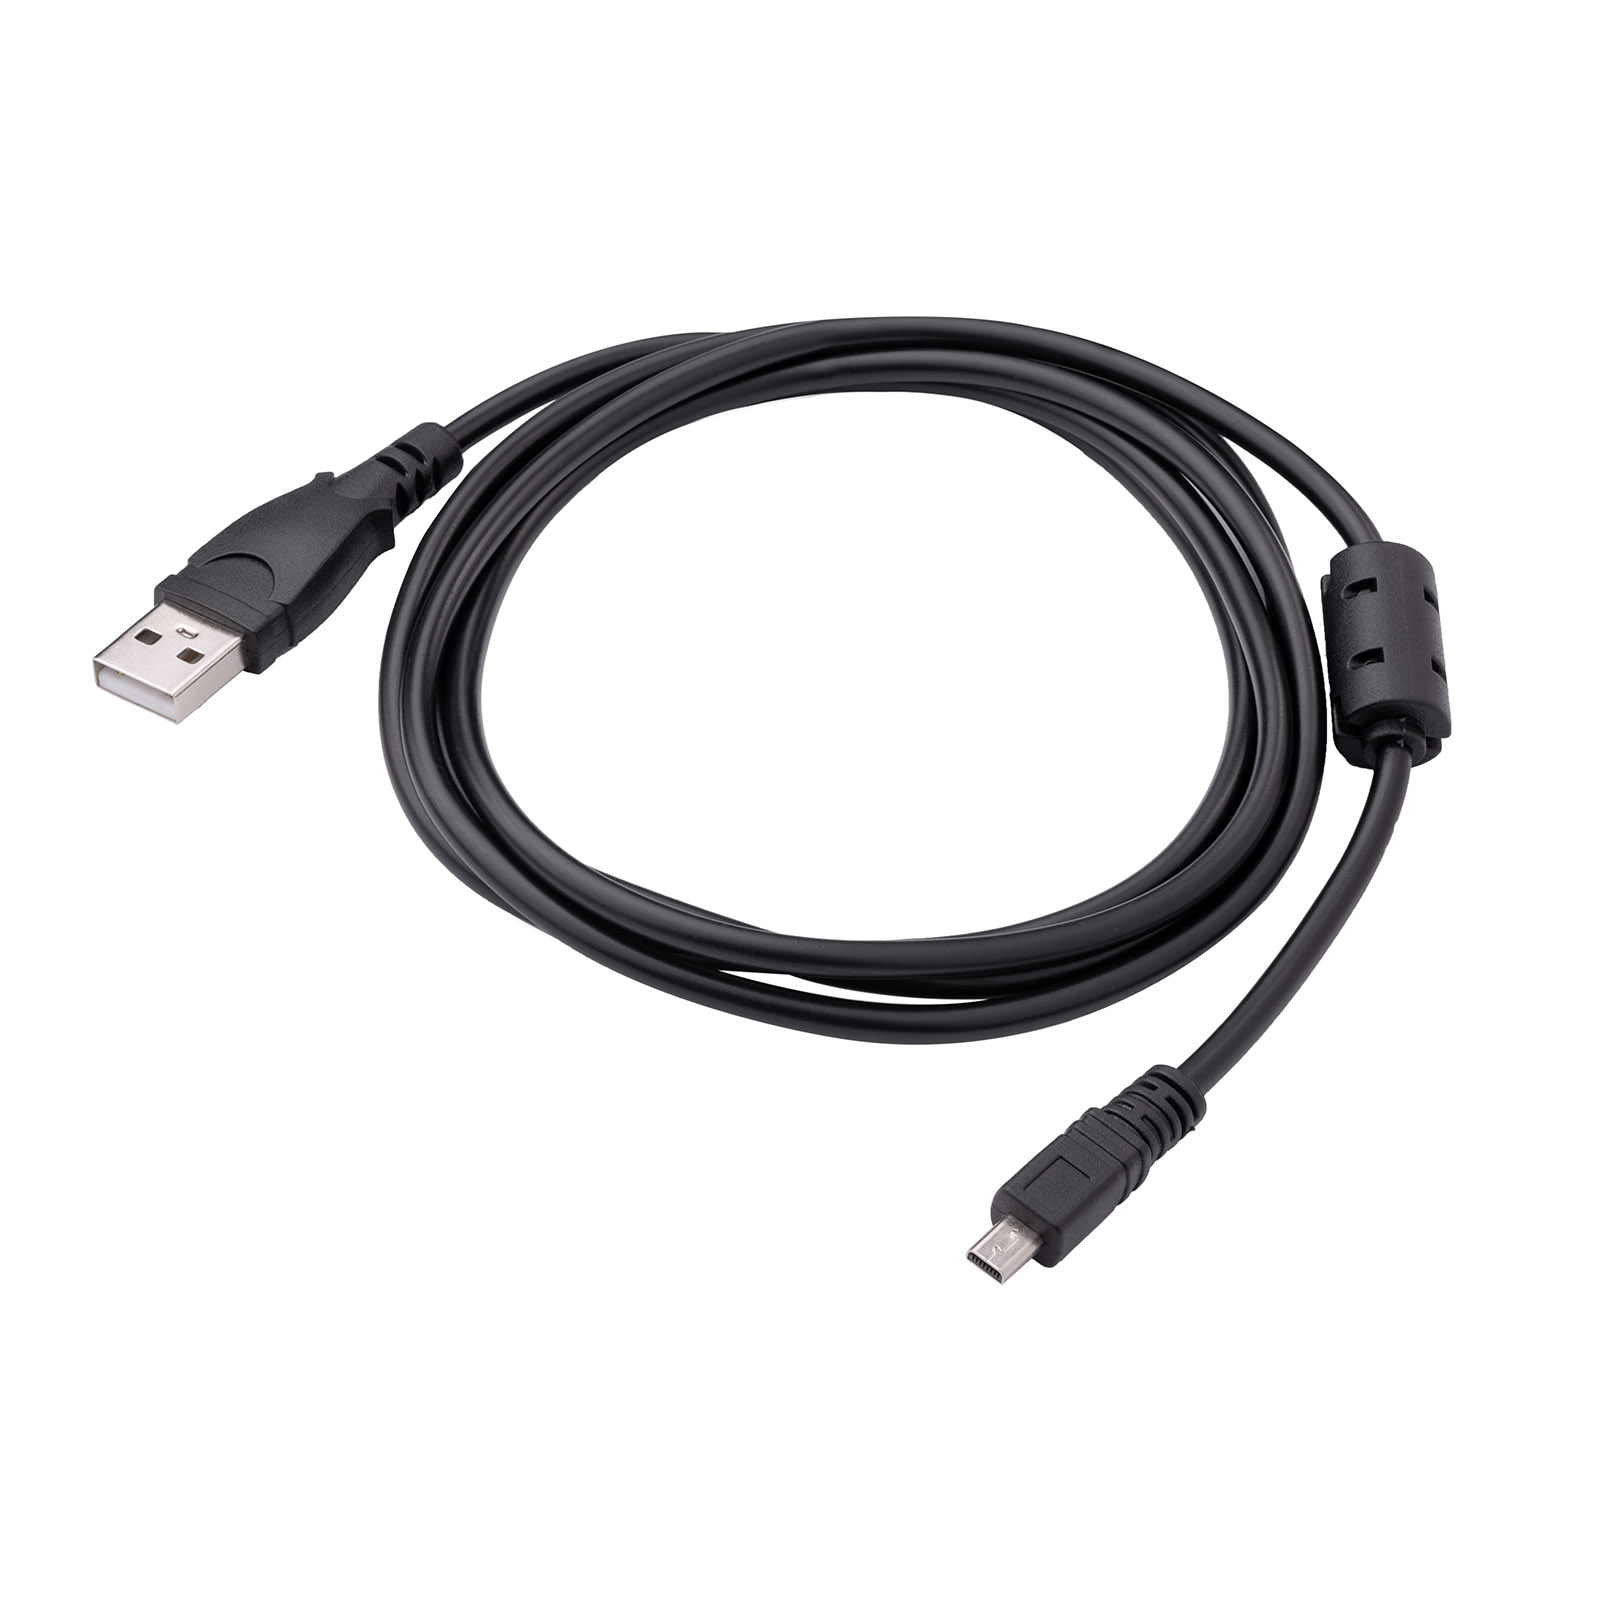 Main image Cable USB A / UC-E6 1.5m AK-USB-20